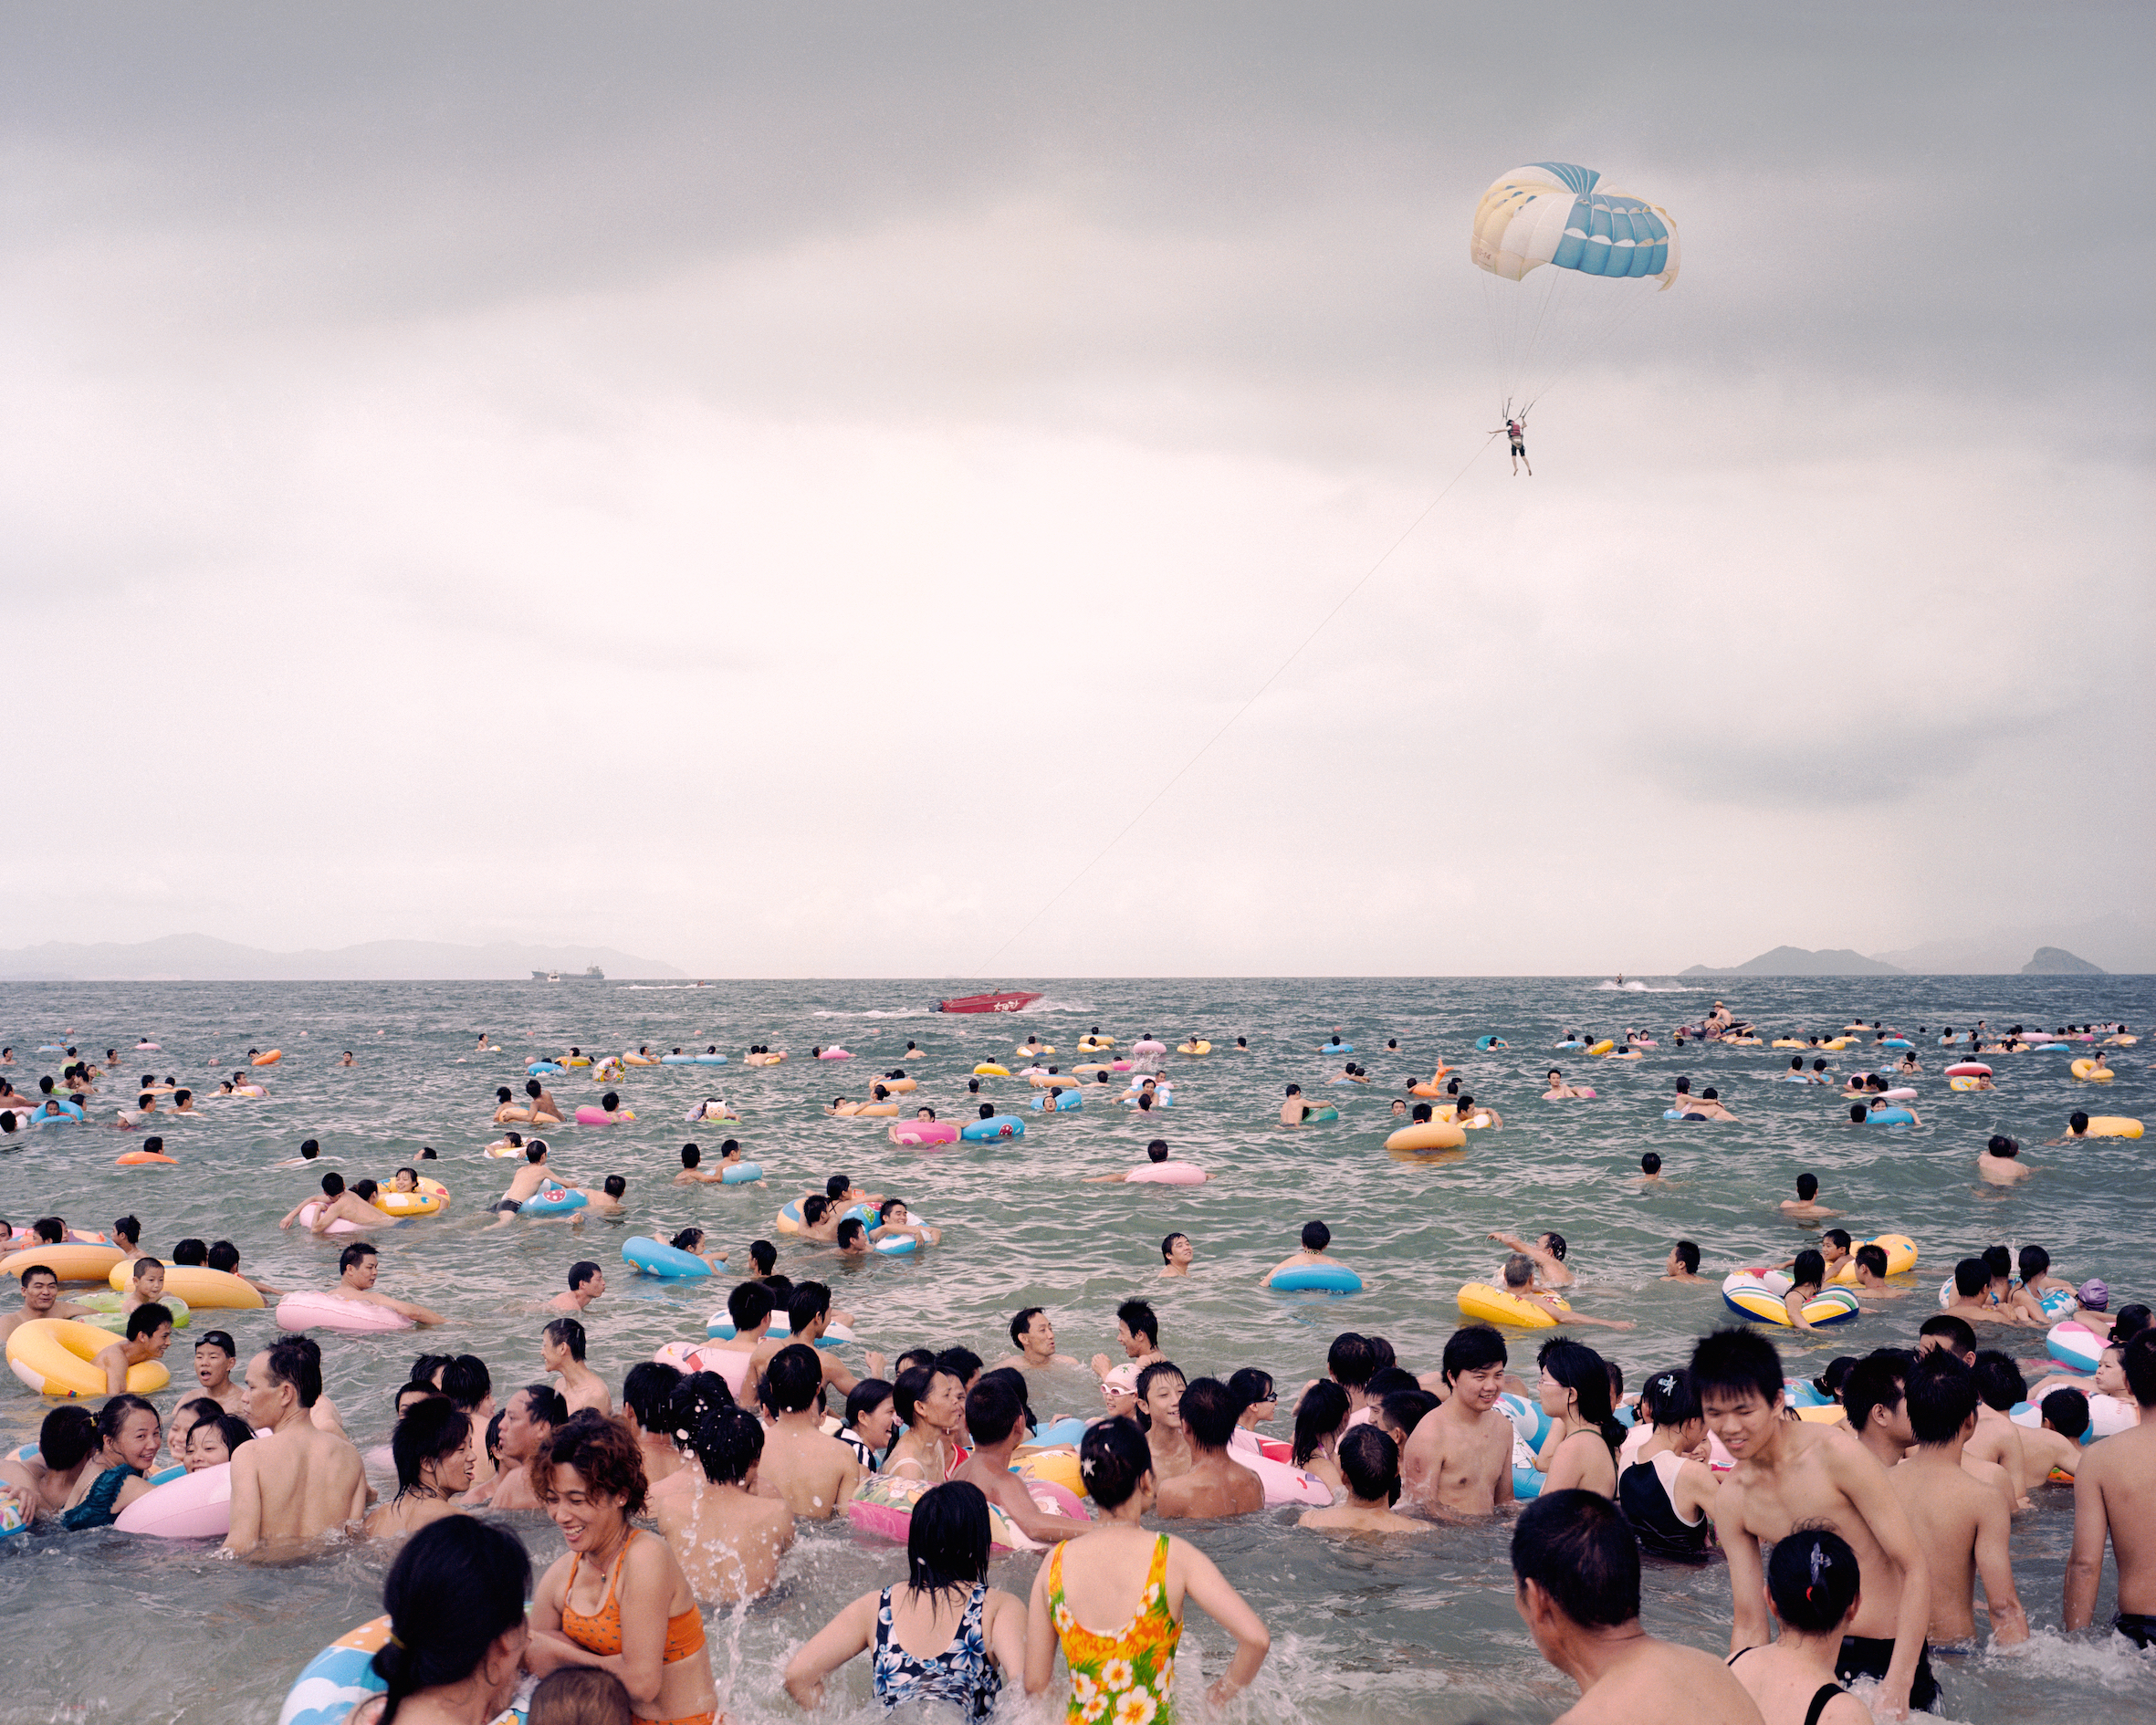 <p><strong>Zhang Xiao</strong>, <em>Coastline No.2</em>, 2009, &copy; Zhang Xiao, courtesy Blindspot Gallery</p>
